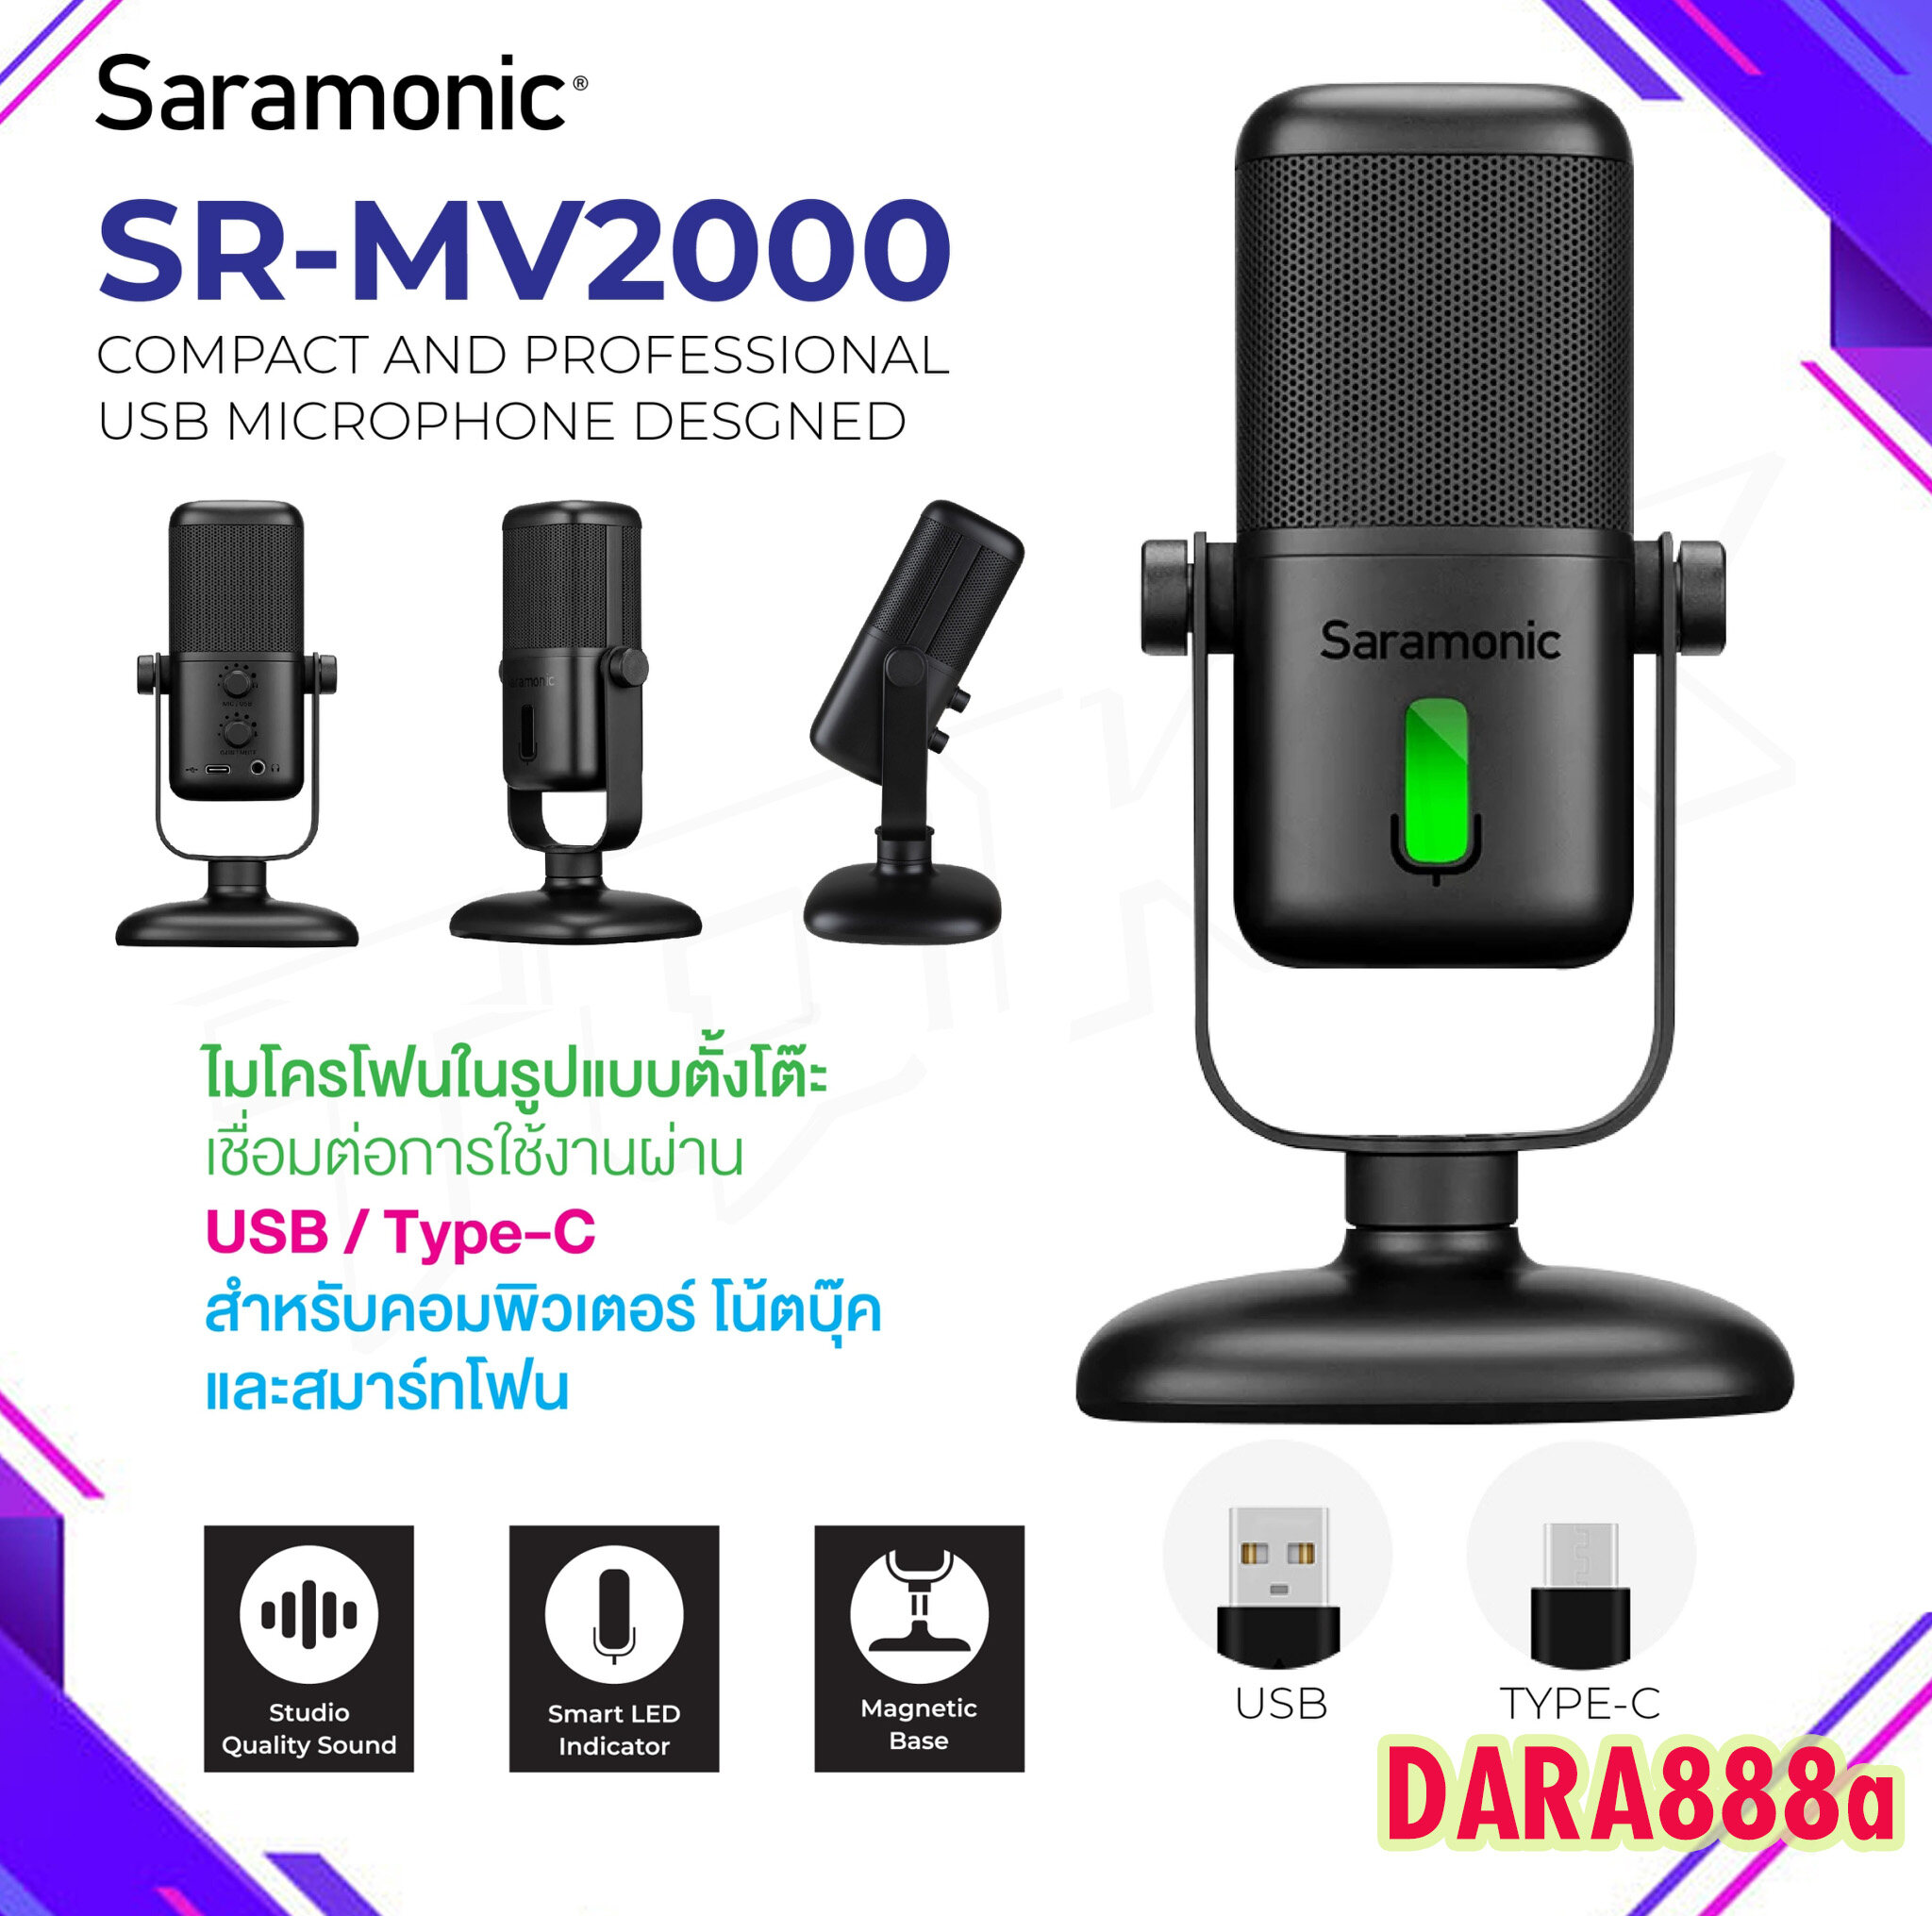 Saramonic SR-MV2000 USB MICROPHONE ไมโครโฟน คอนเดนเซอร์ รองรับสมาร์ทโฟน Type - C และ คอม/โน๊ตบุ๊ค ของแท้ 100RA888A